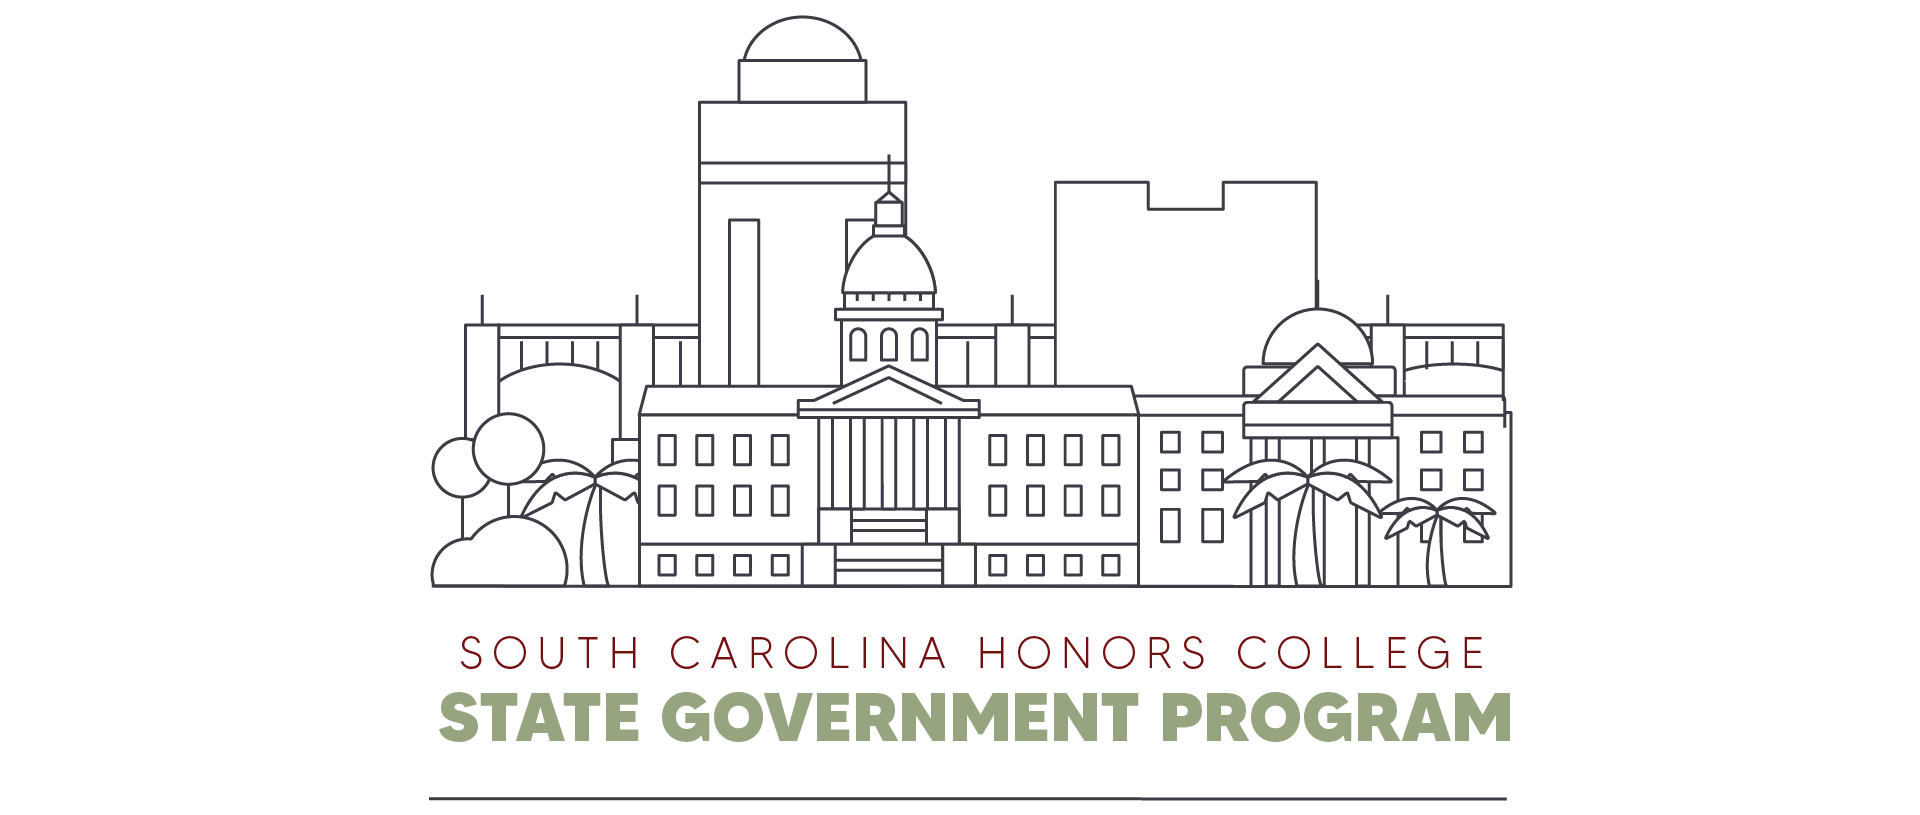 State Government Program banner image